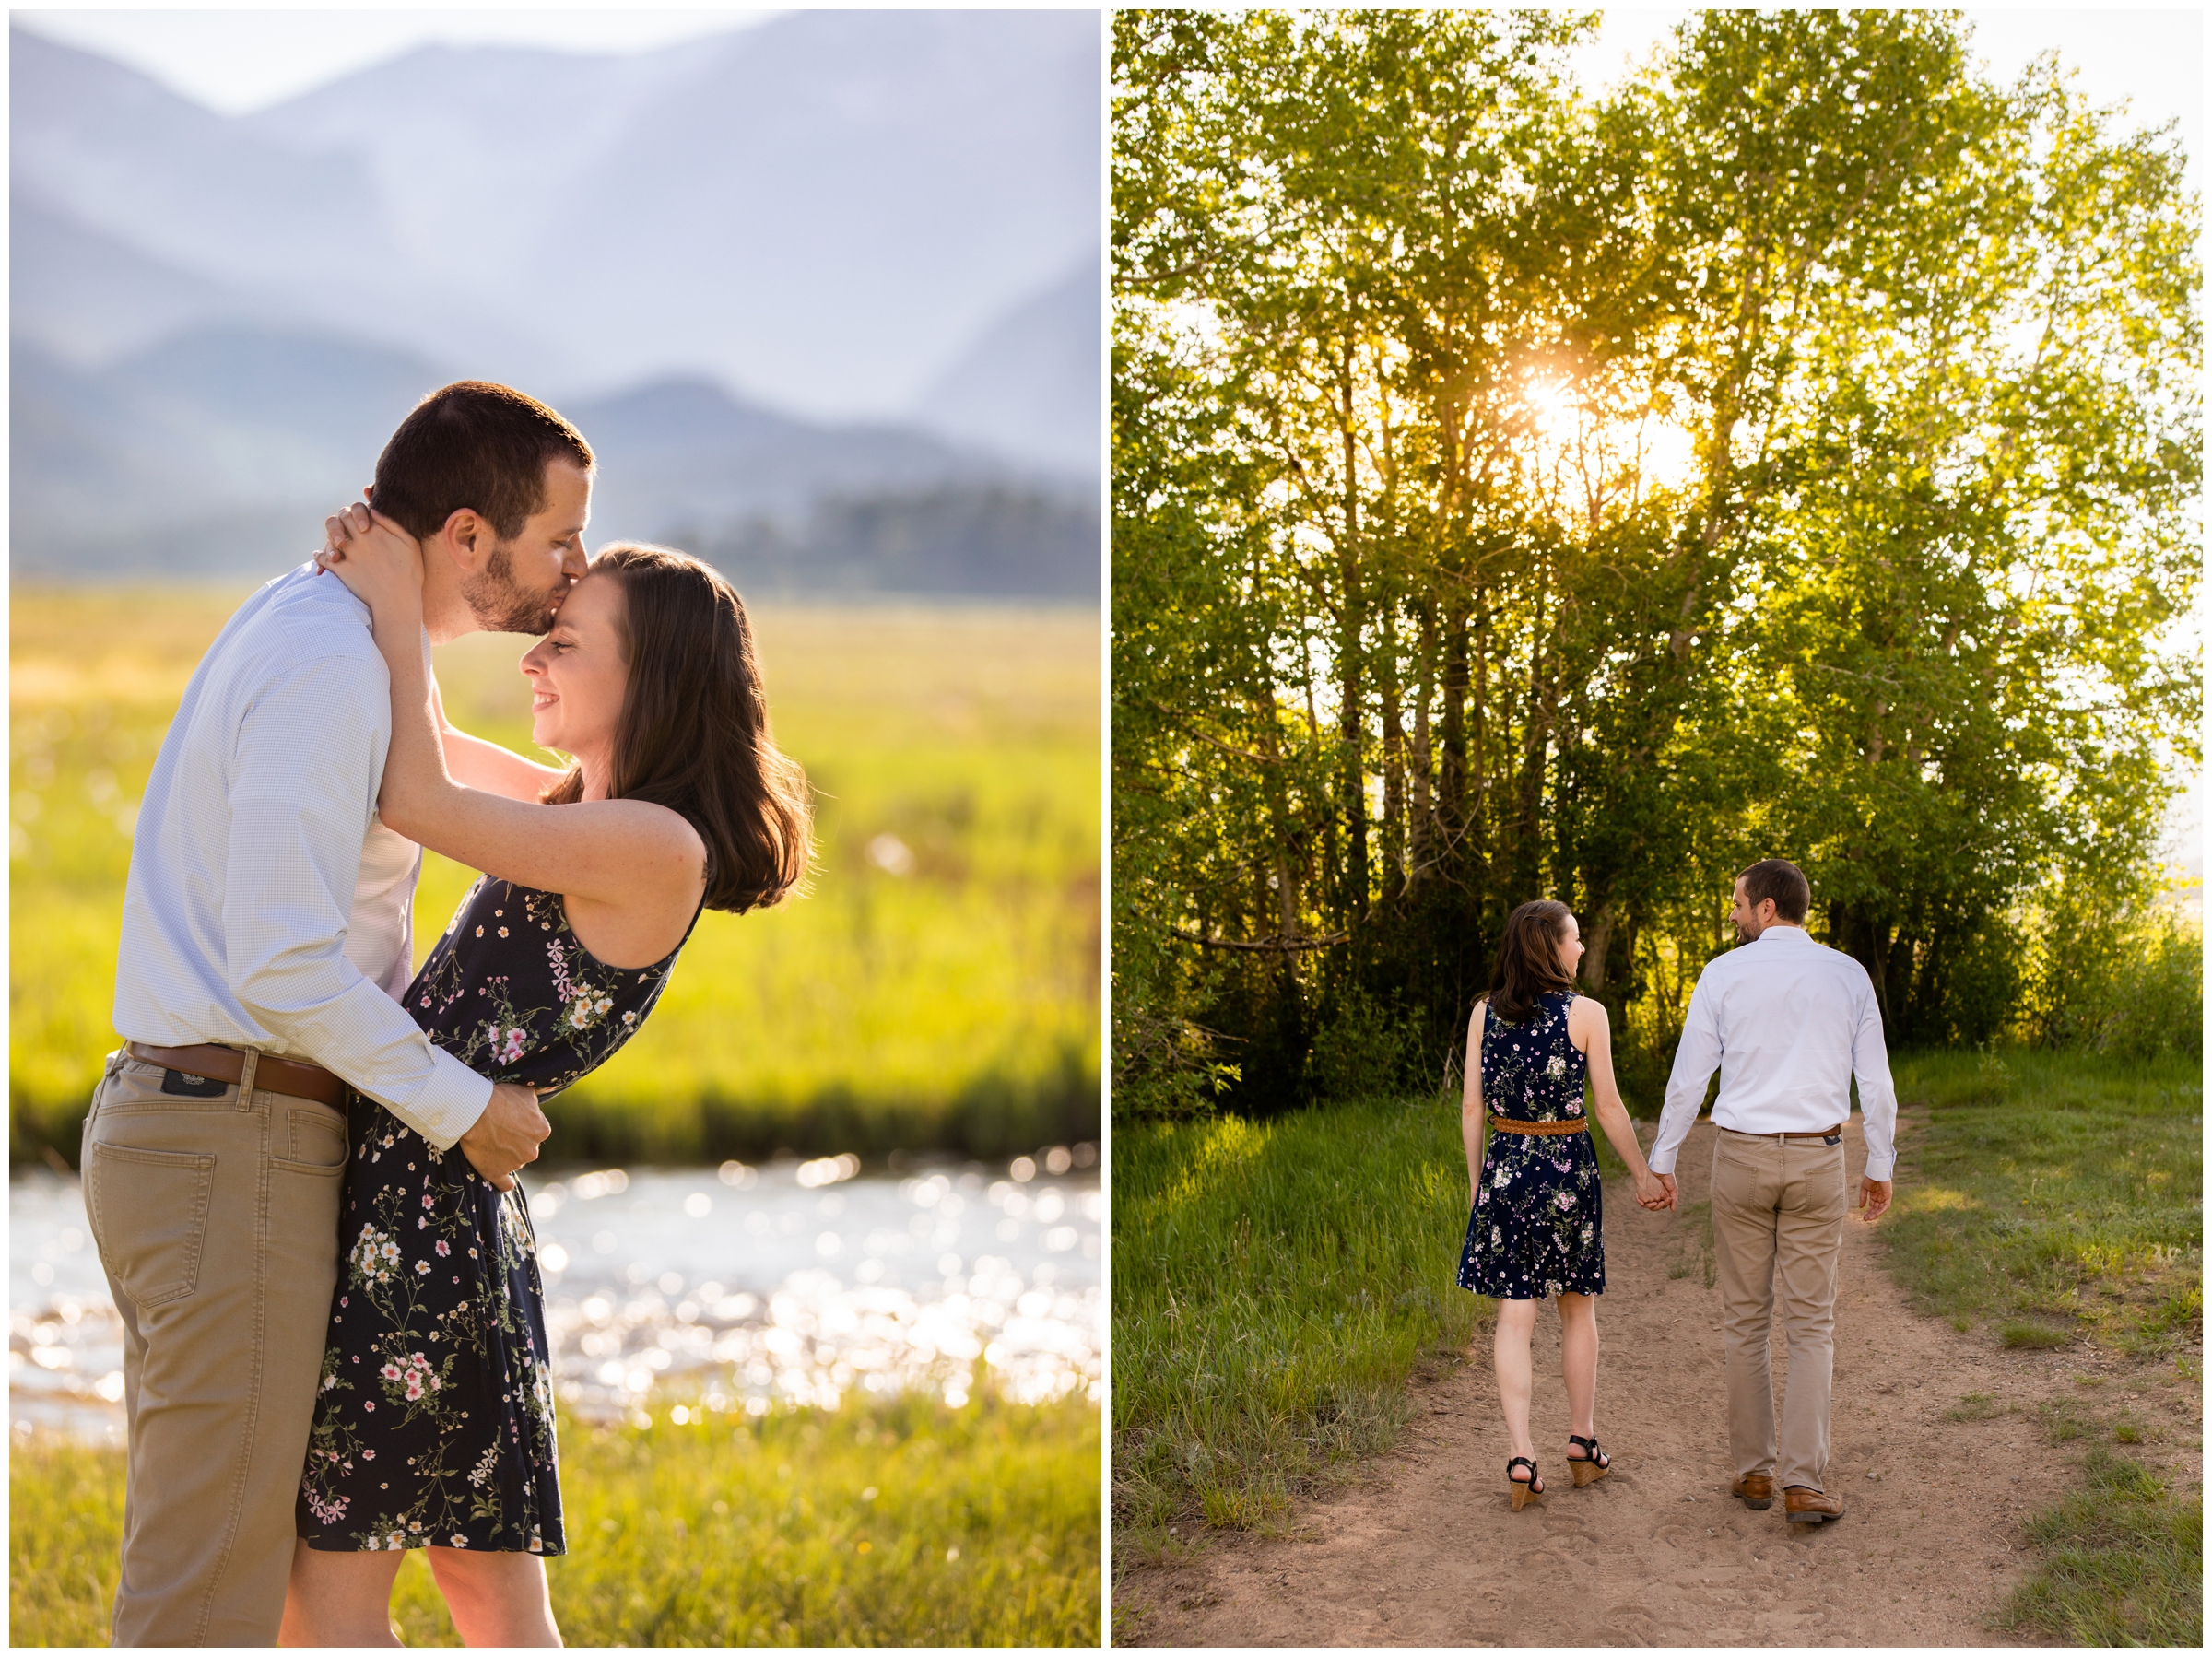 RMNP summer engagement photos at Moraine Park and Sprague Lake by Estes Park Colorado wedding photographer Plum Pretty Photography